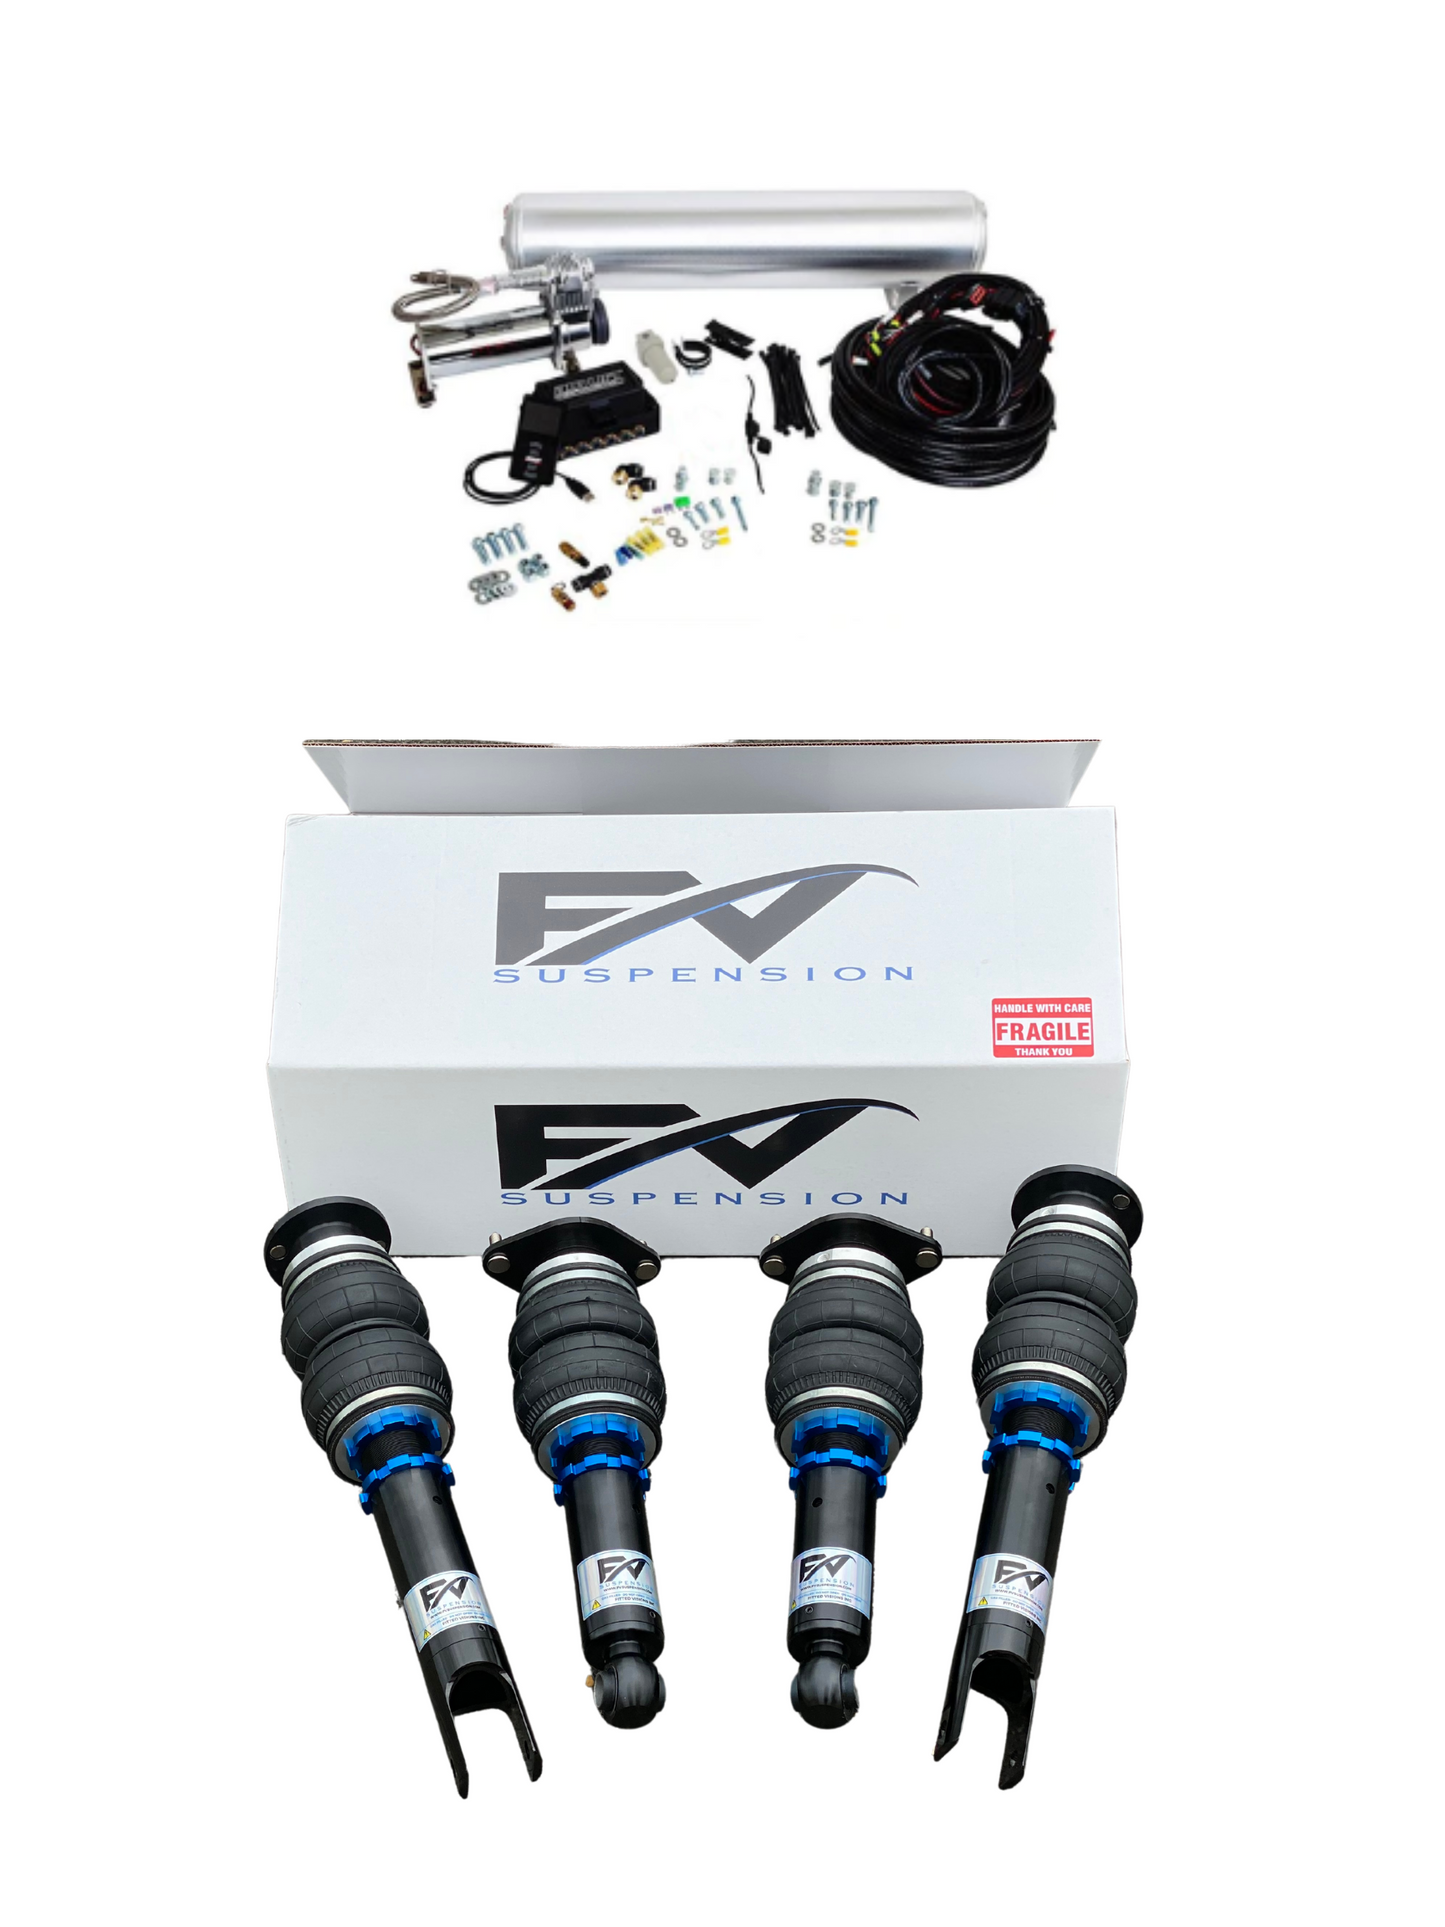 FV Suspension 3P Tier 2 Complete Air Ride kit for 13-15 BMW 3 Series GT - FVALtier2kit91